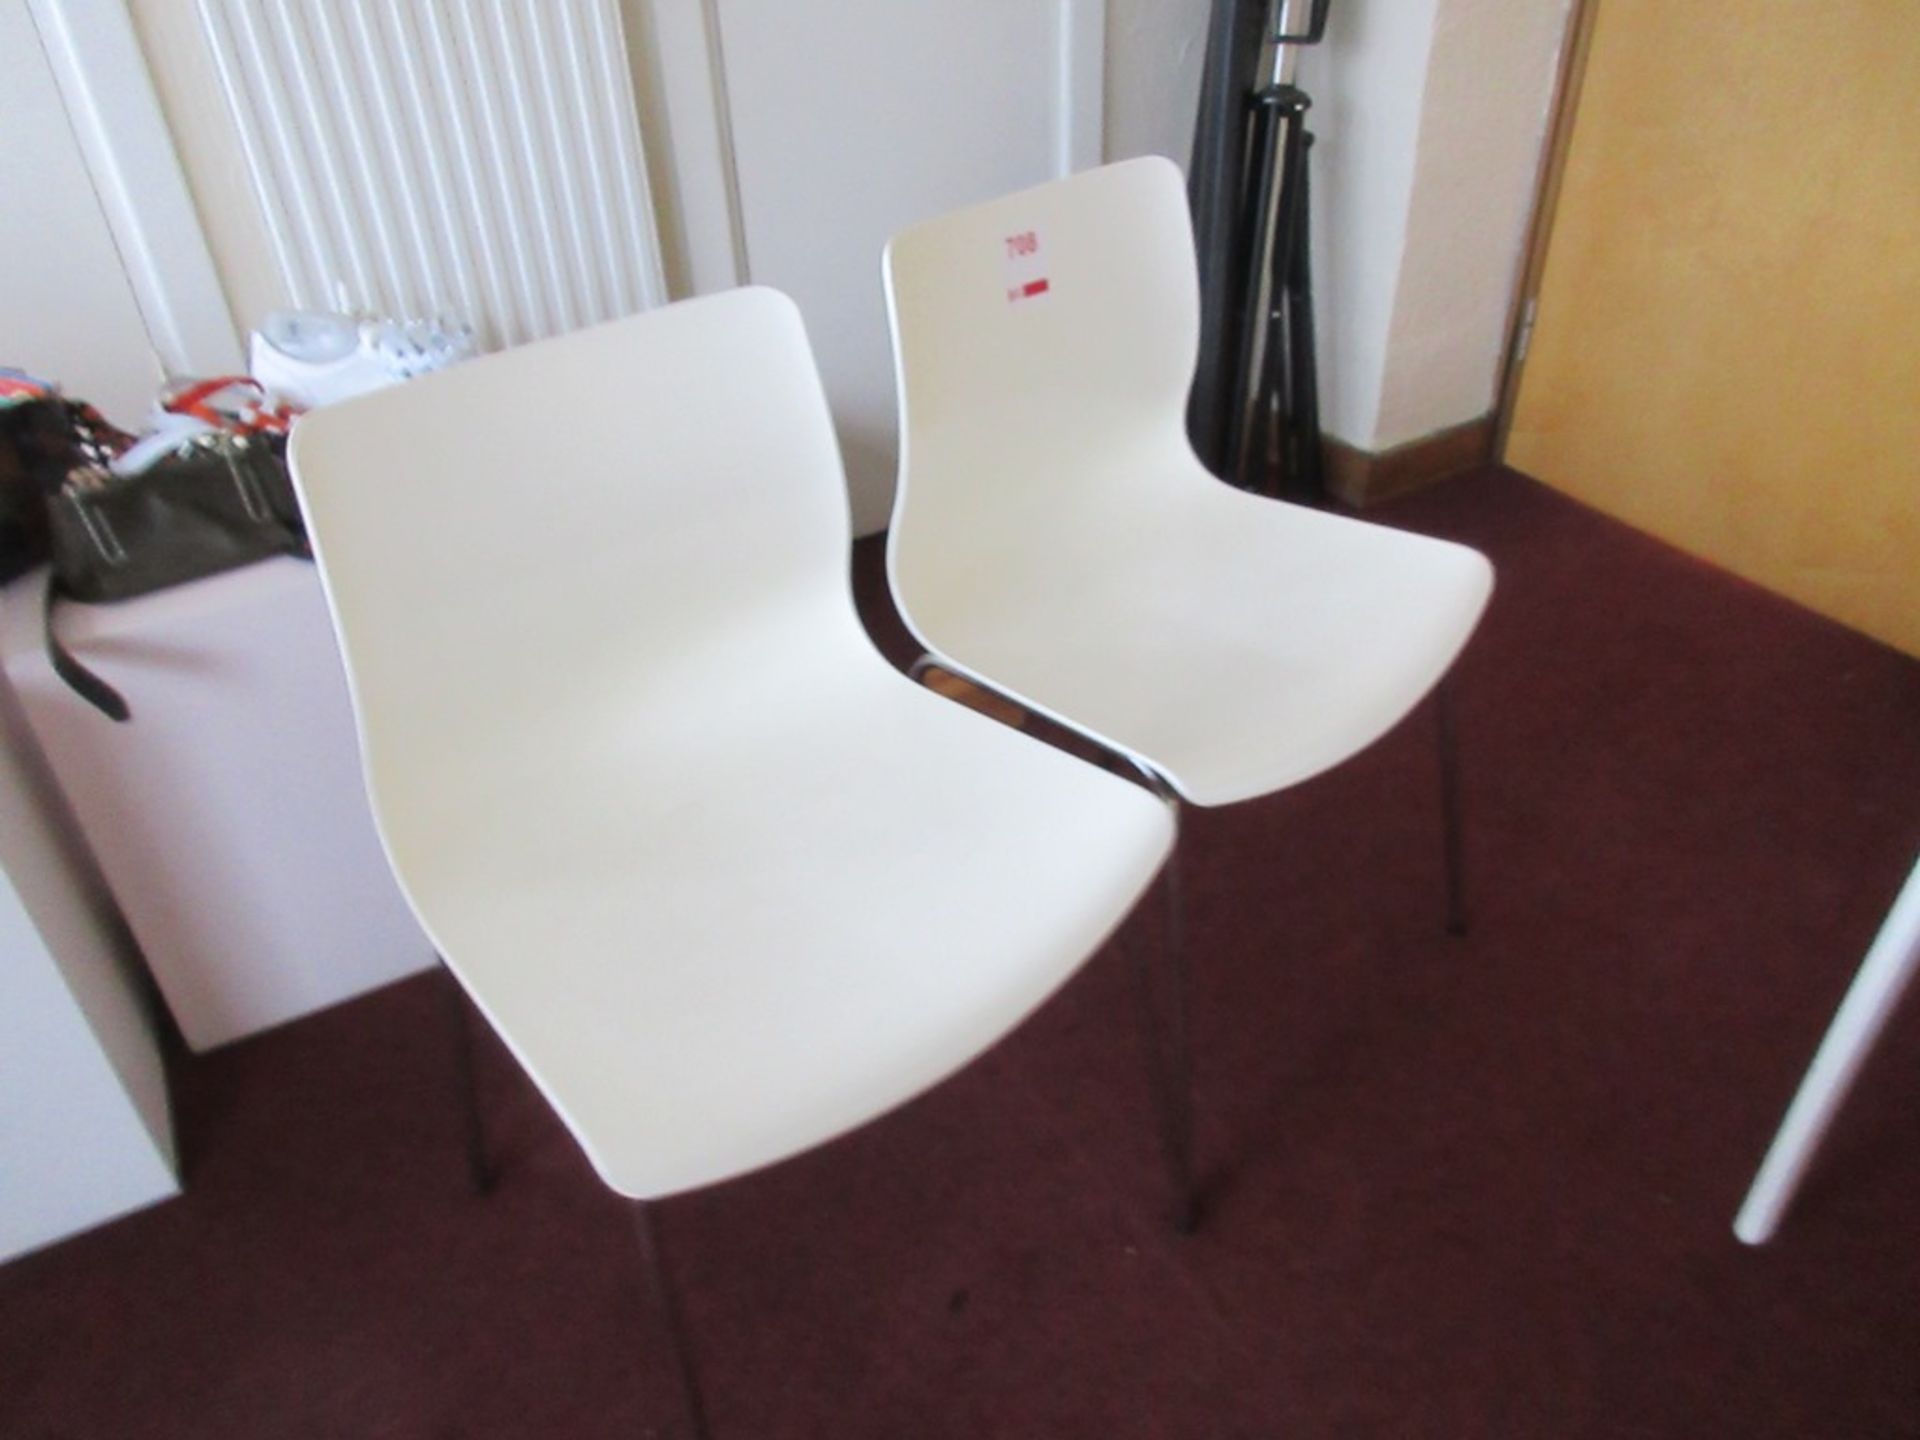 Four chrome frame / plastic chairs